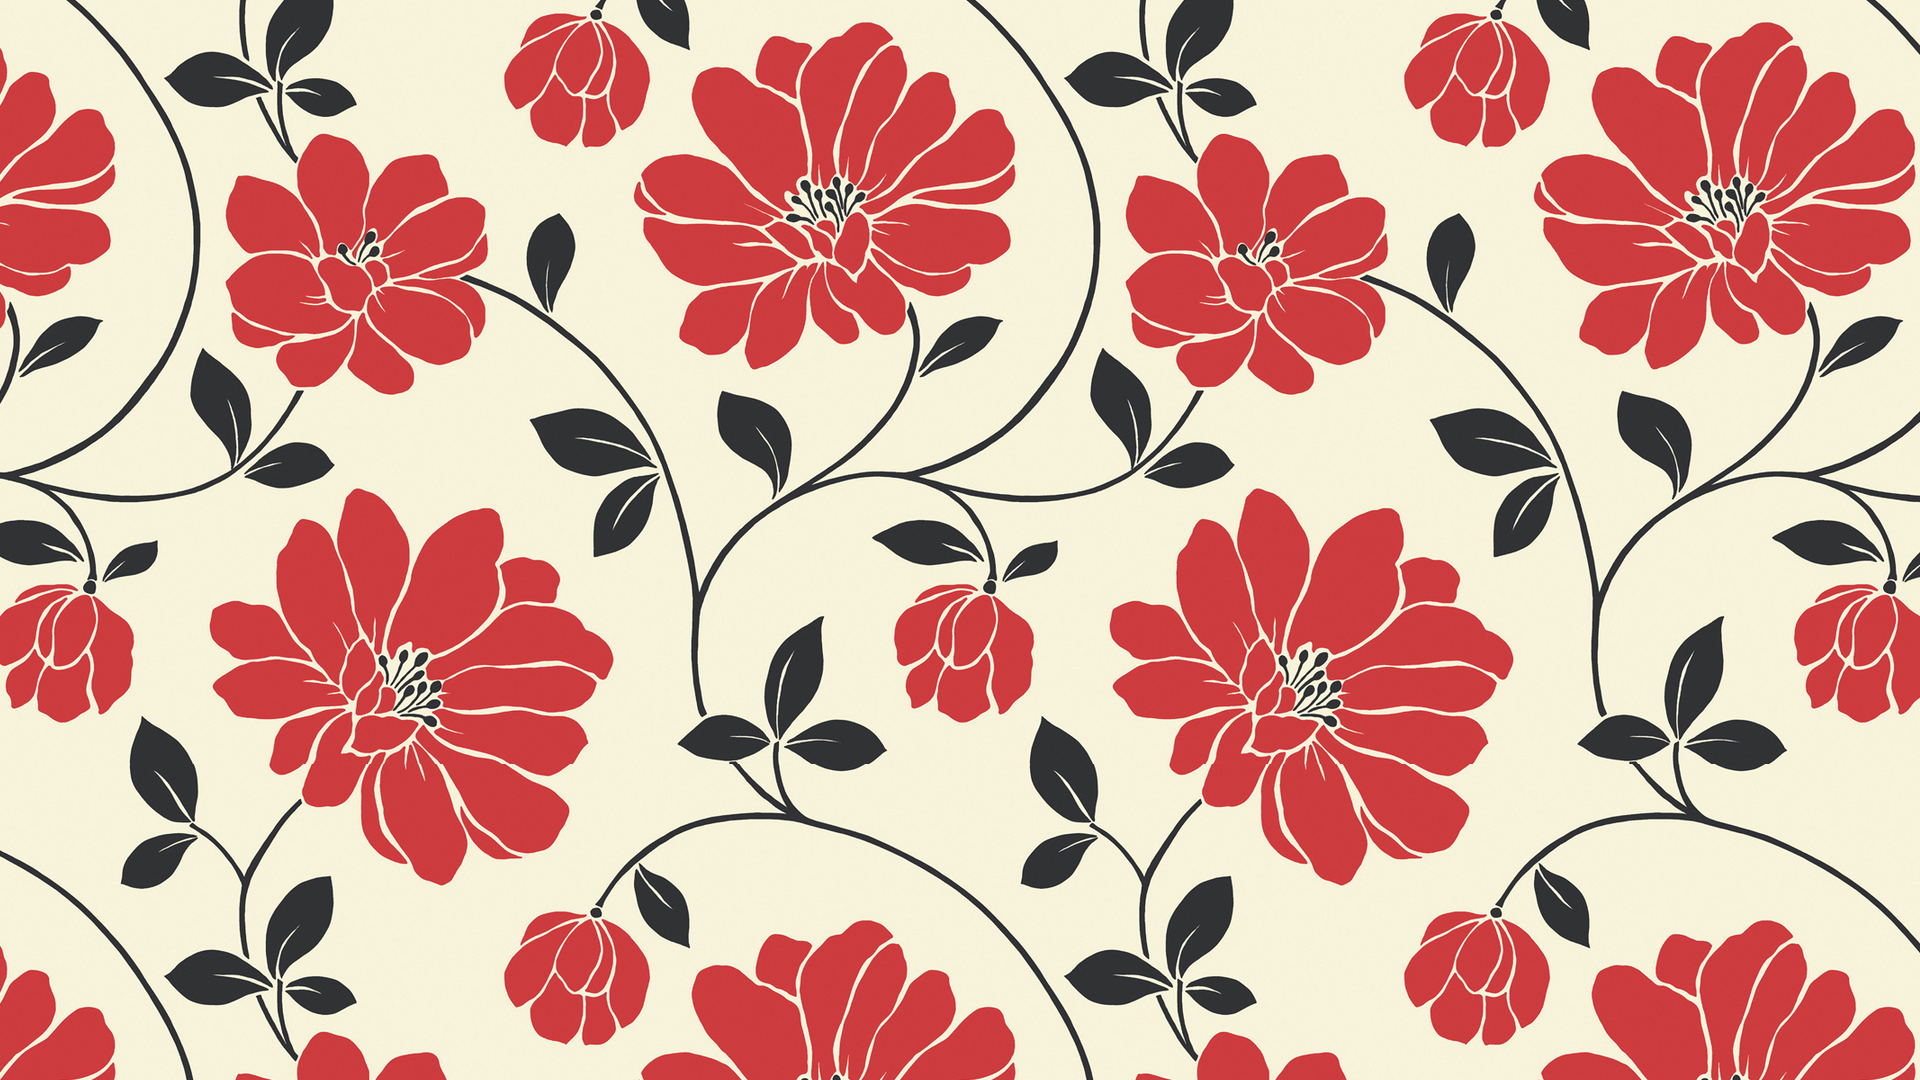 Cool Flower Wallpaper Tumblr 17809 1920x1080 px